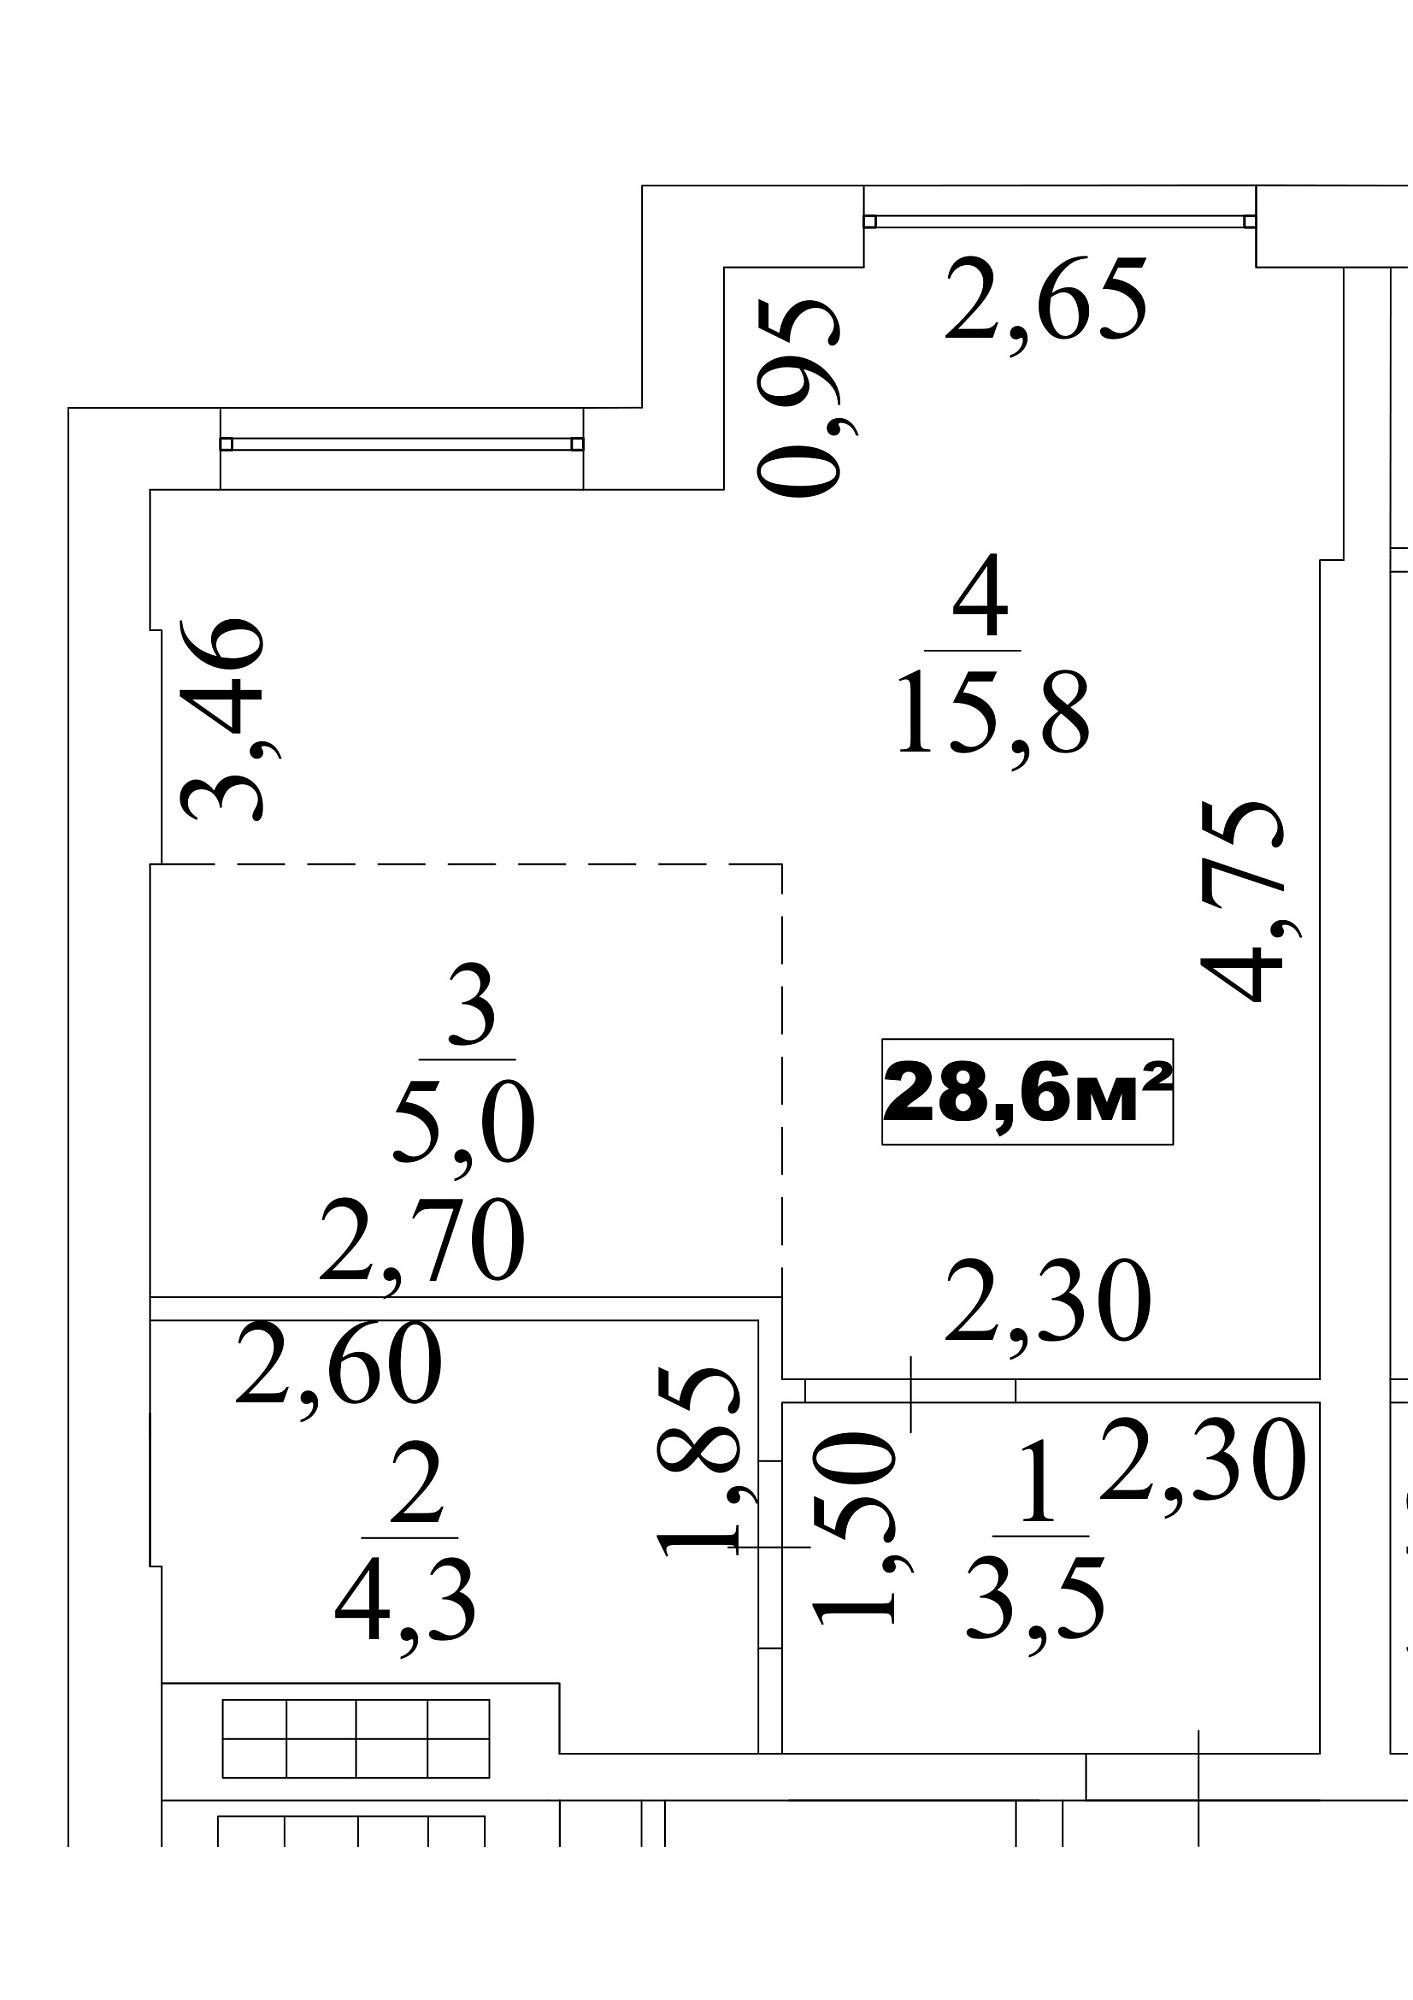 Planning Smart flats area 28.6m2, AB-10-01/0003б.